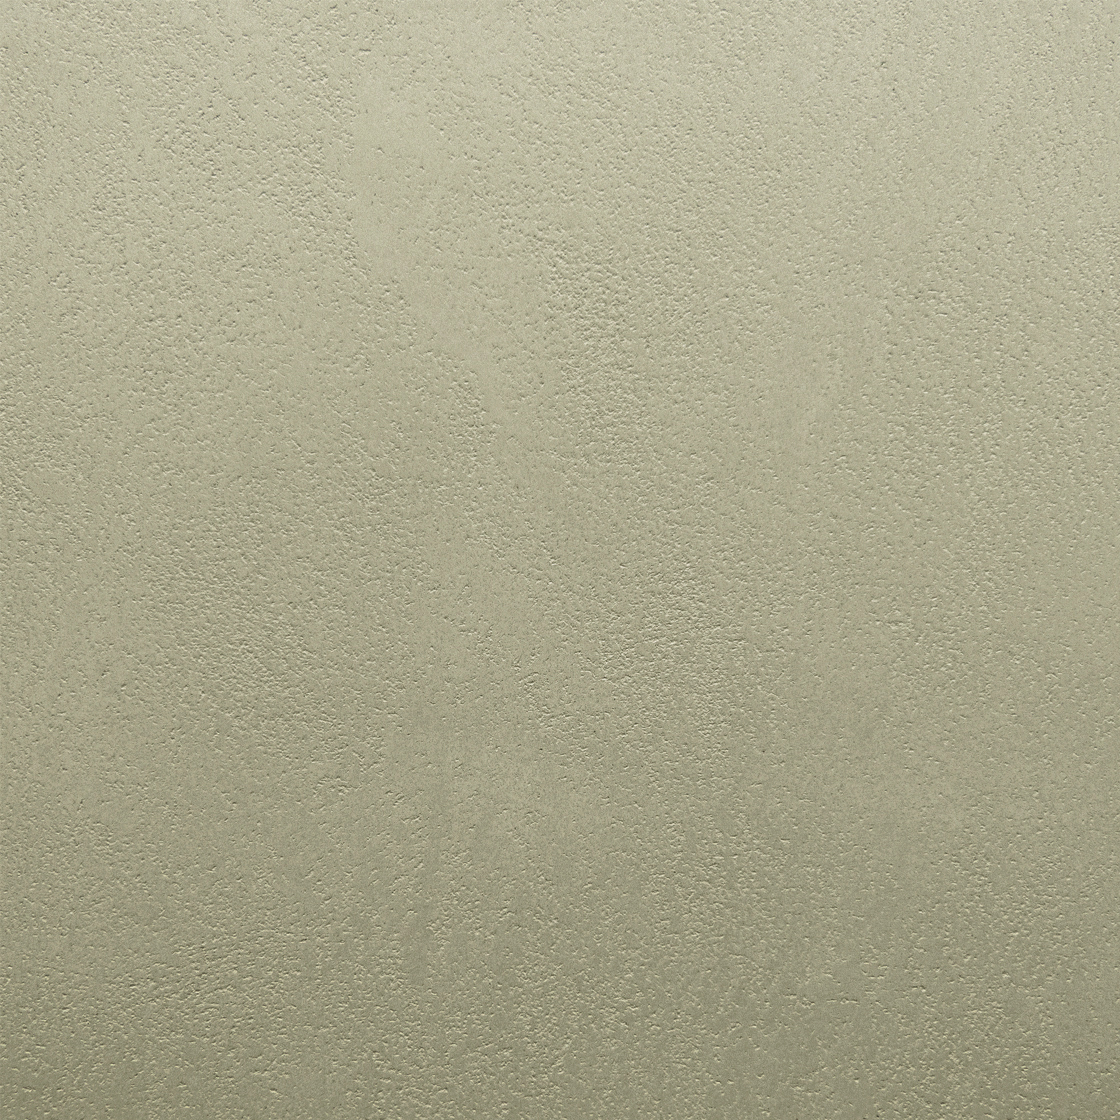 Close up of Armourcoat leatherstone exterior polished plaster finish - 63